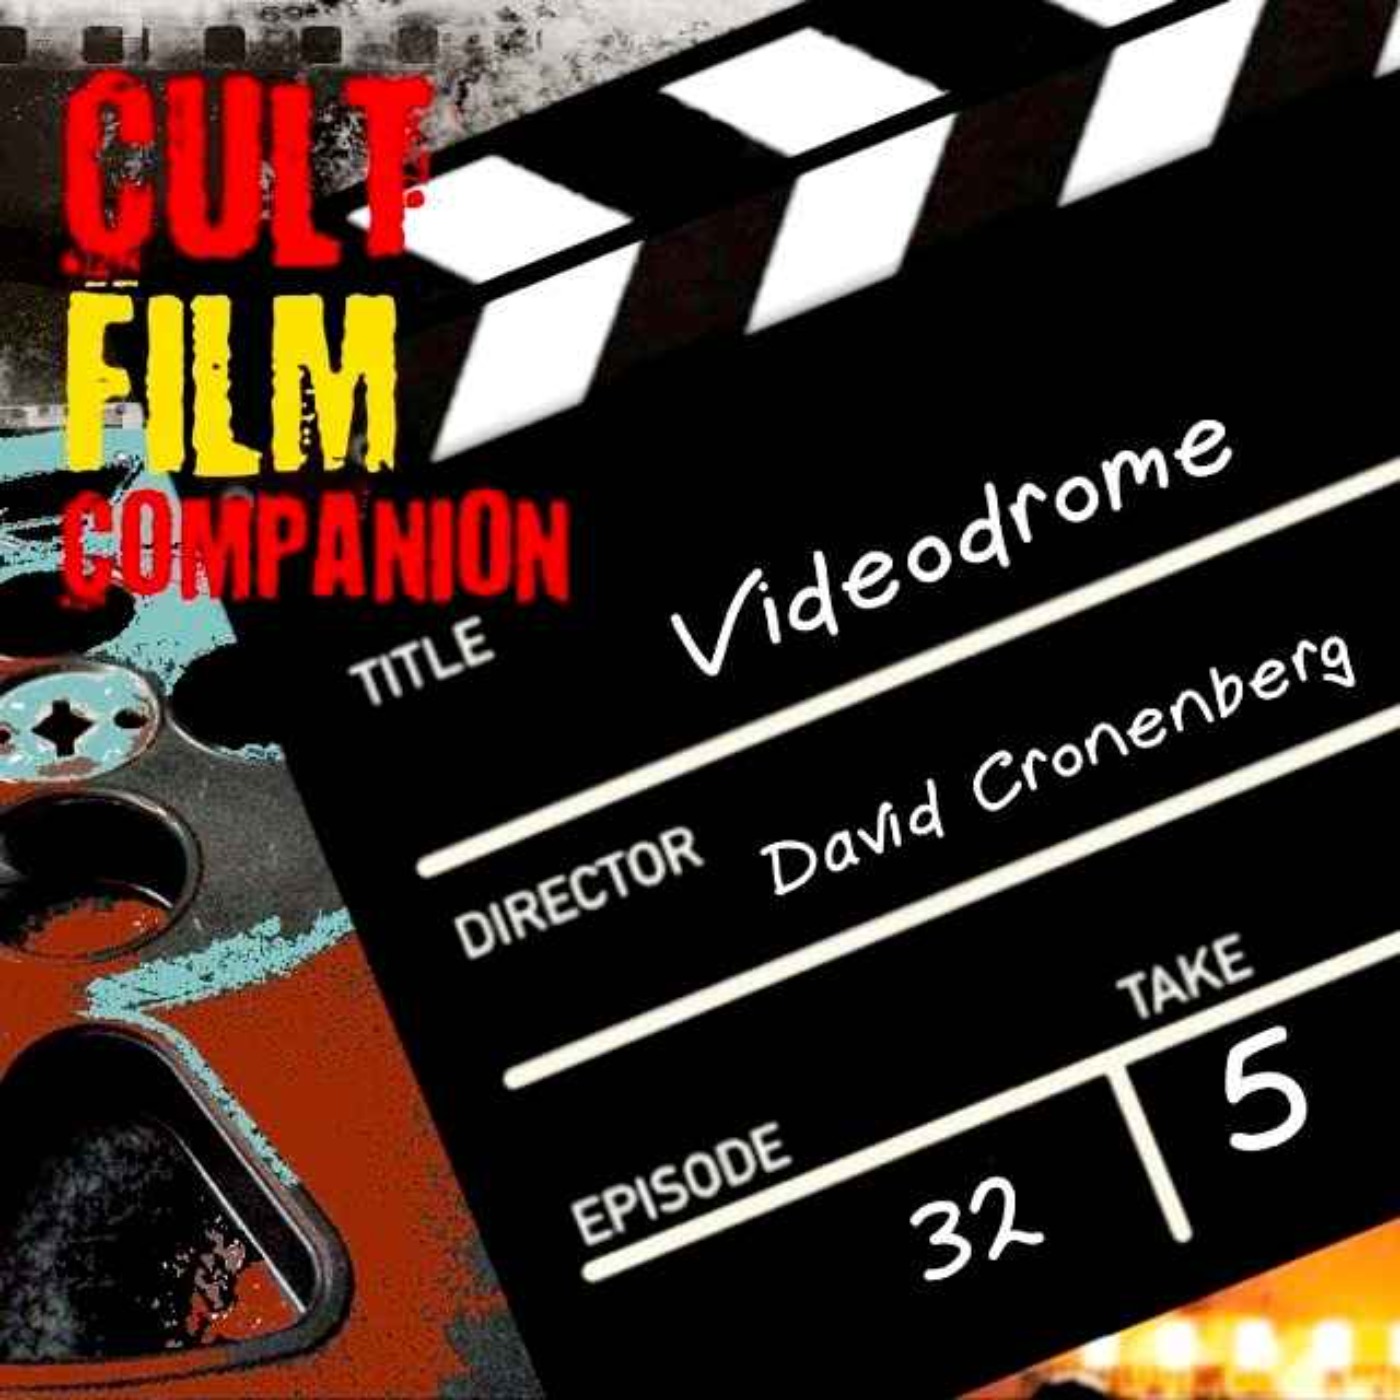 Ep. 32 Videodrome directed by David Cronenberg